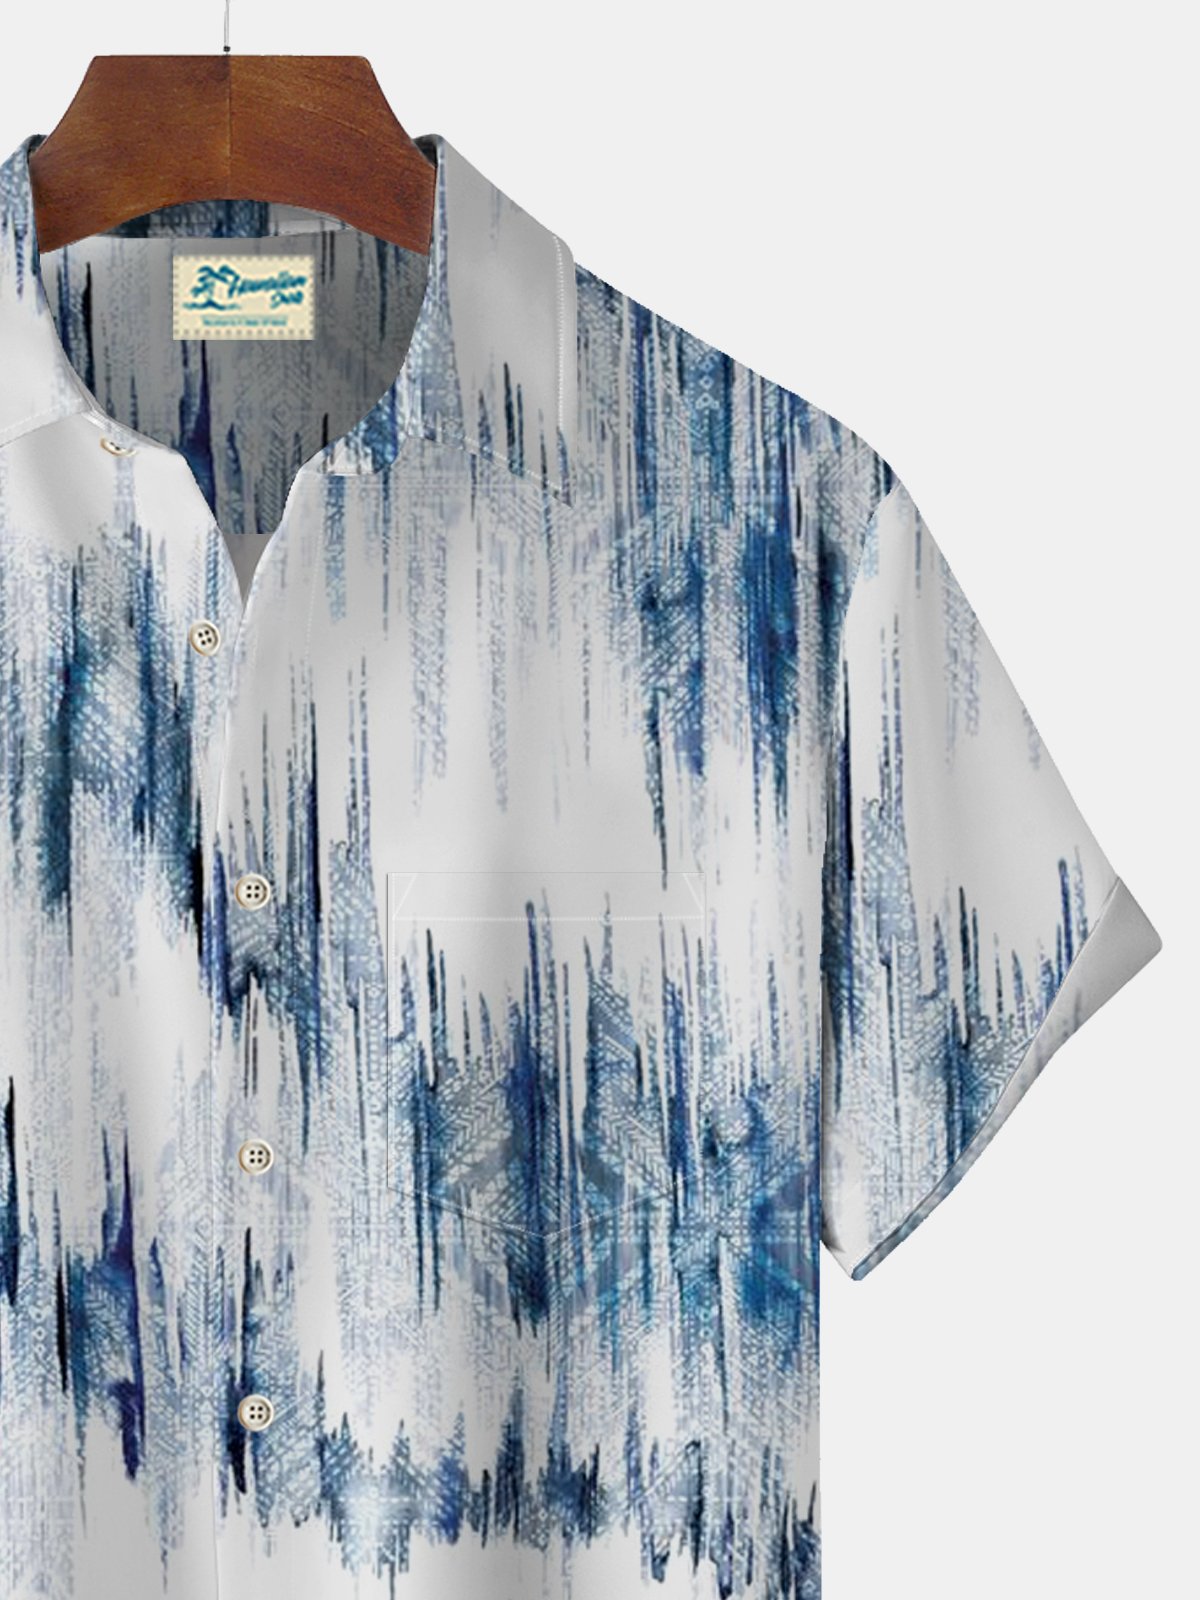 Royaura Vintage Textured Gradient Print Beach Men's Hawaiian Oversized Shirt With Pocket